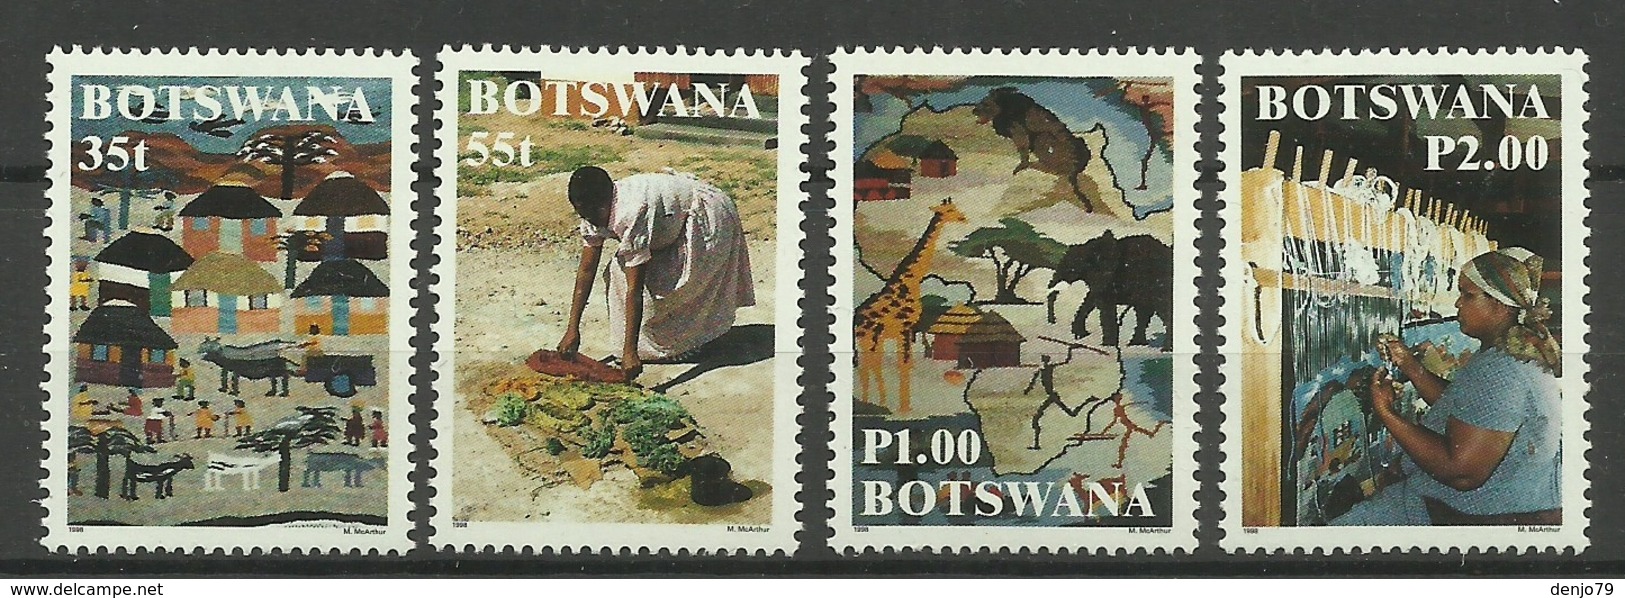 BOTSWANA 1998 TEXTILE,WEAVERS SET MNH - Botswana (1966-...)